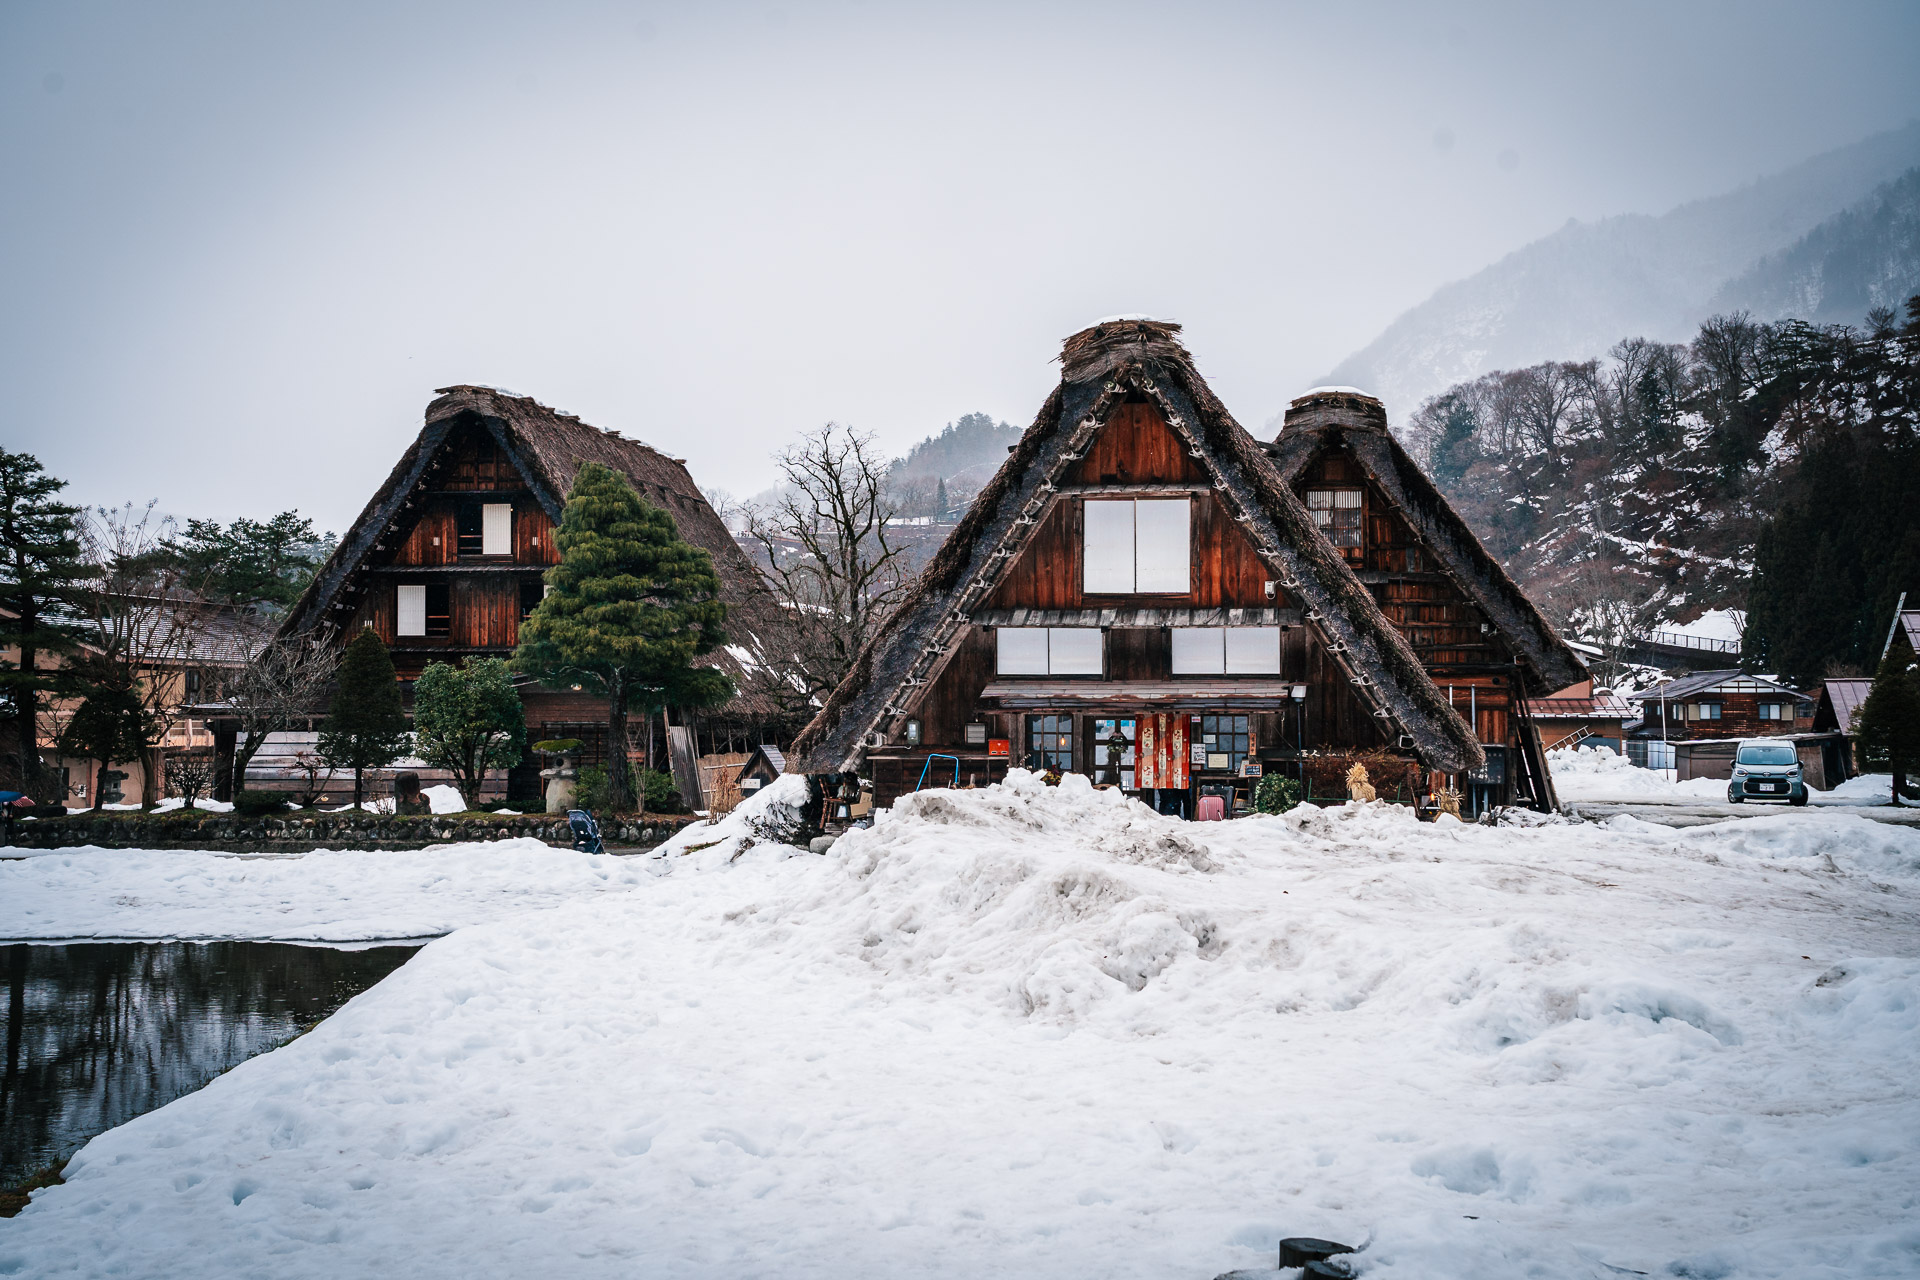 Shirakawa-go in Japan: 5 great reasons to visit this fairytale village